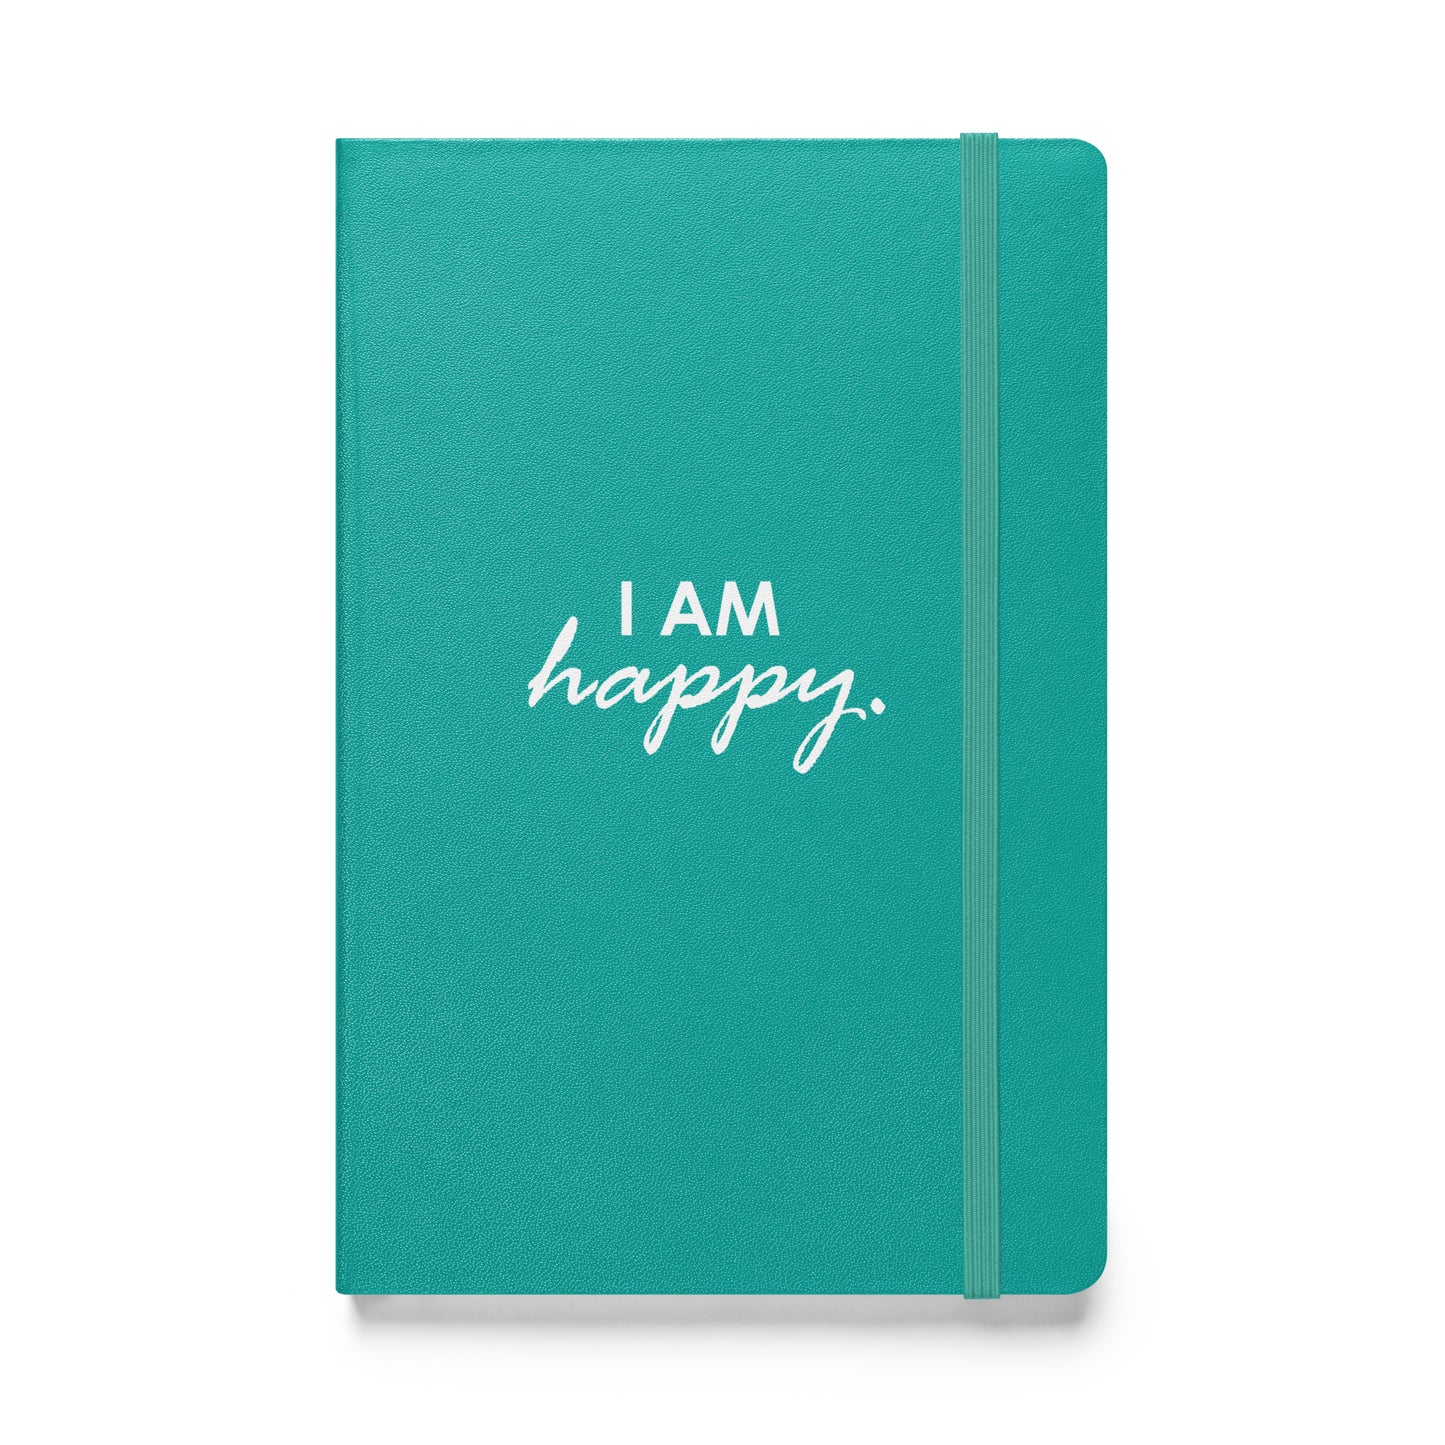 I AM HAPPY - Hardcover bound notebook $ FREE Affirmation Digital Download